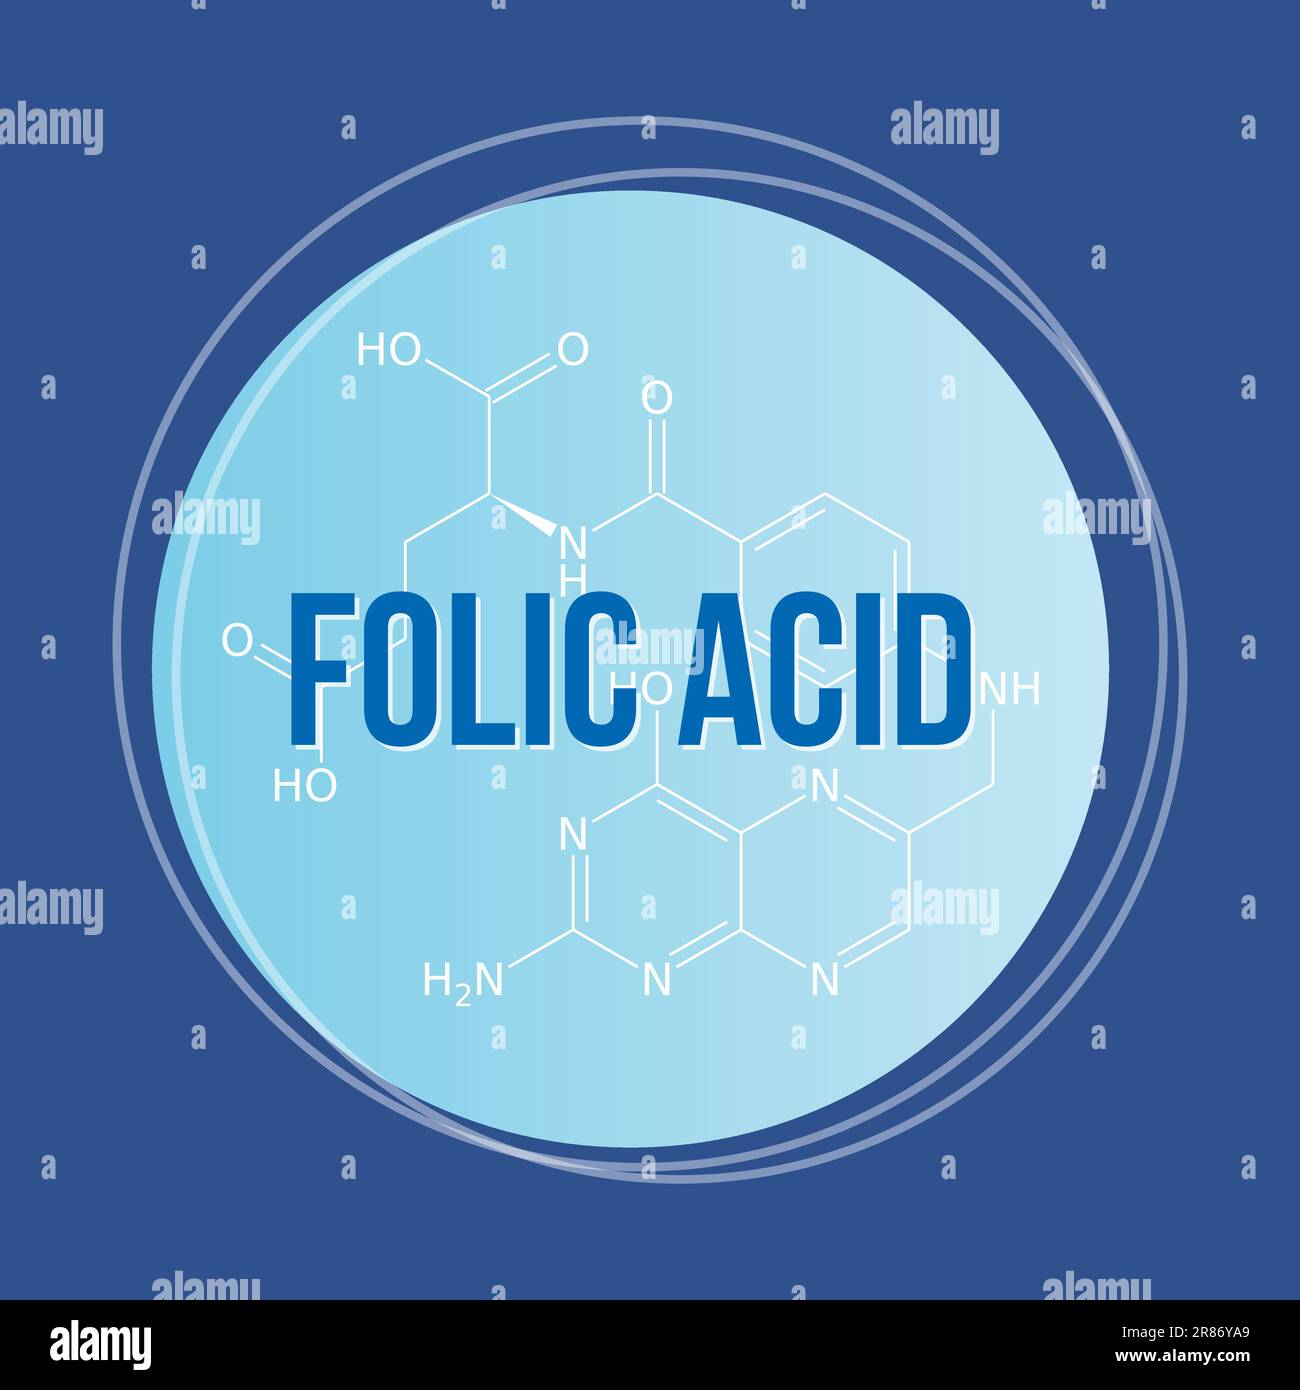 Folic acid, vitamin b9, round icon with formula, blue background, vector medical illustration Stock Vector